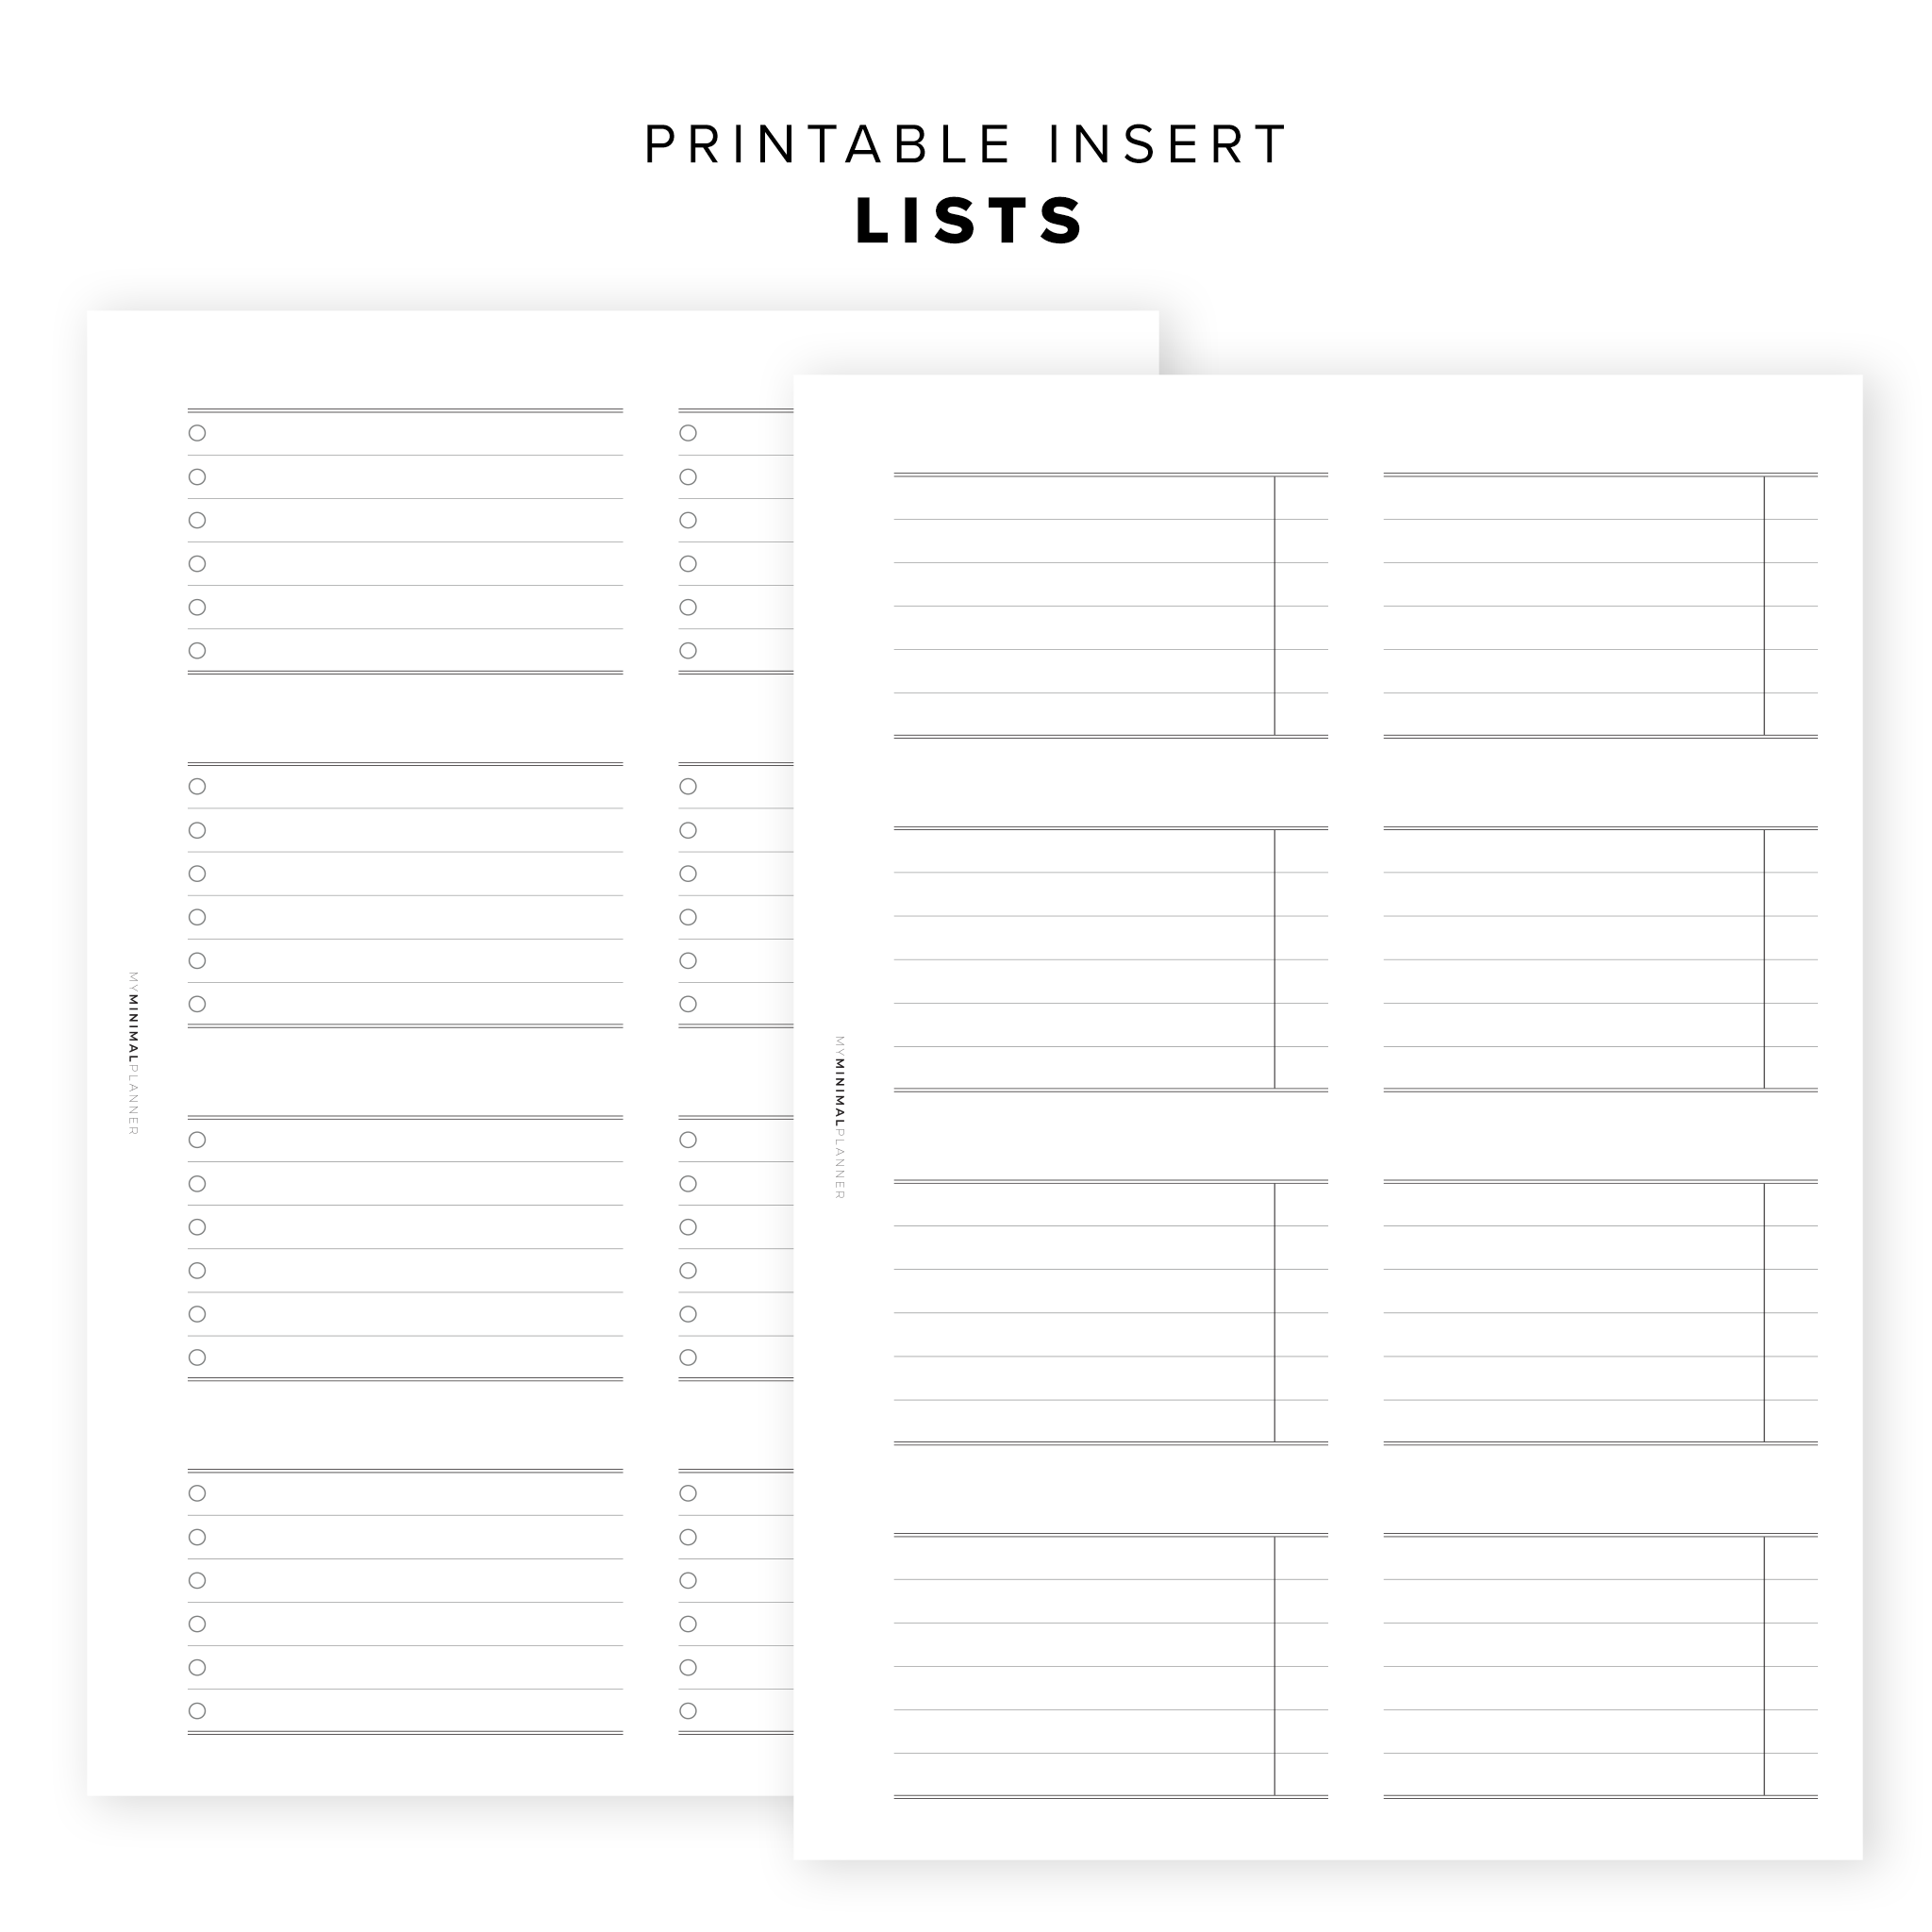 PR189 - The Spicy List - Printable Insert – My Minimal Planner